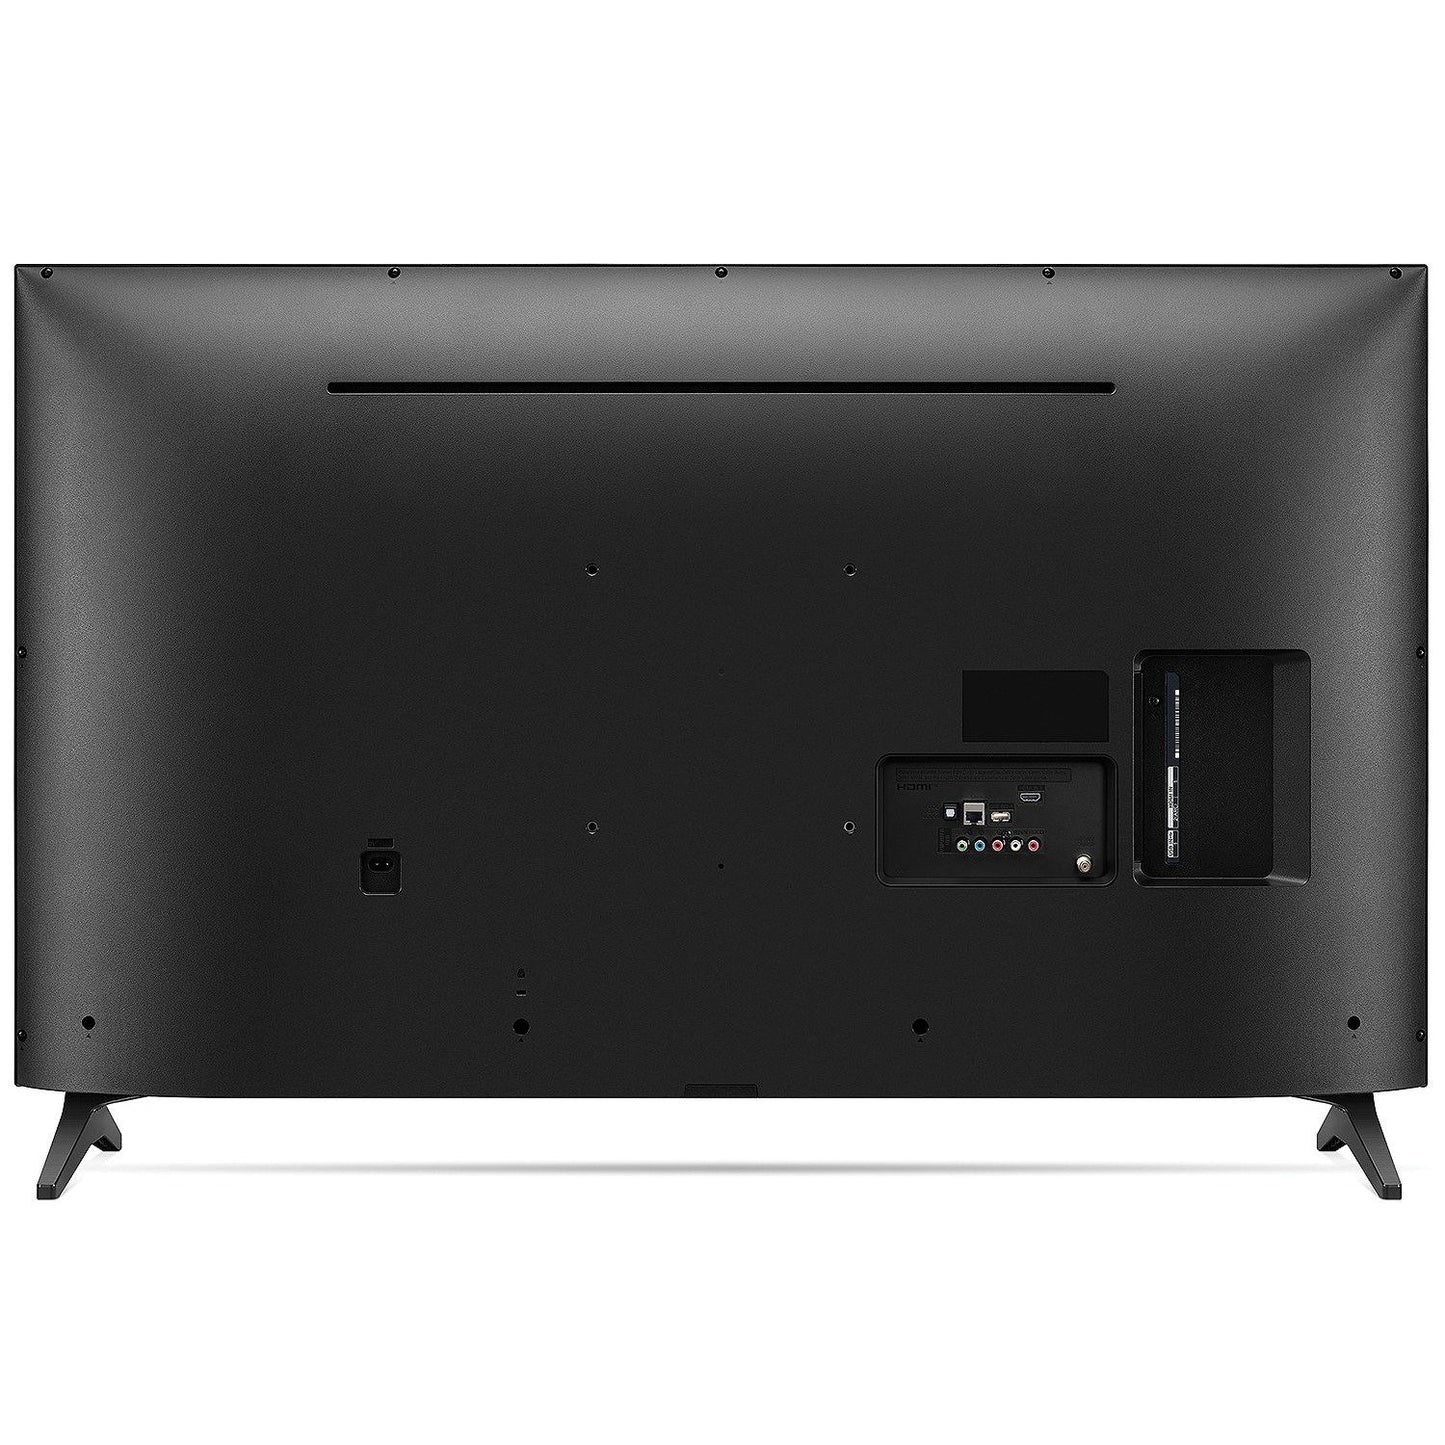 LG 43UN7300PUF 43-Inch Class 4K UHD Smart TV with AI ThinQ®